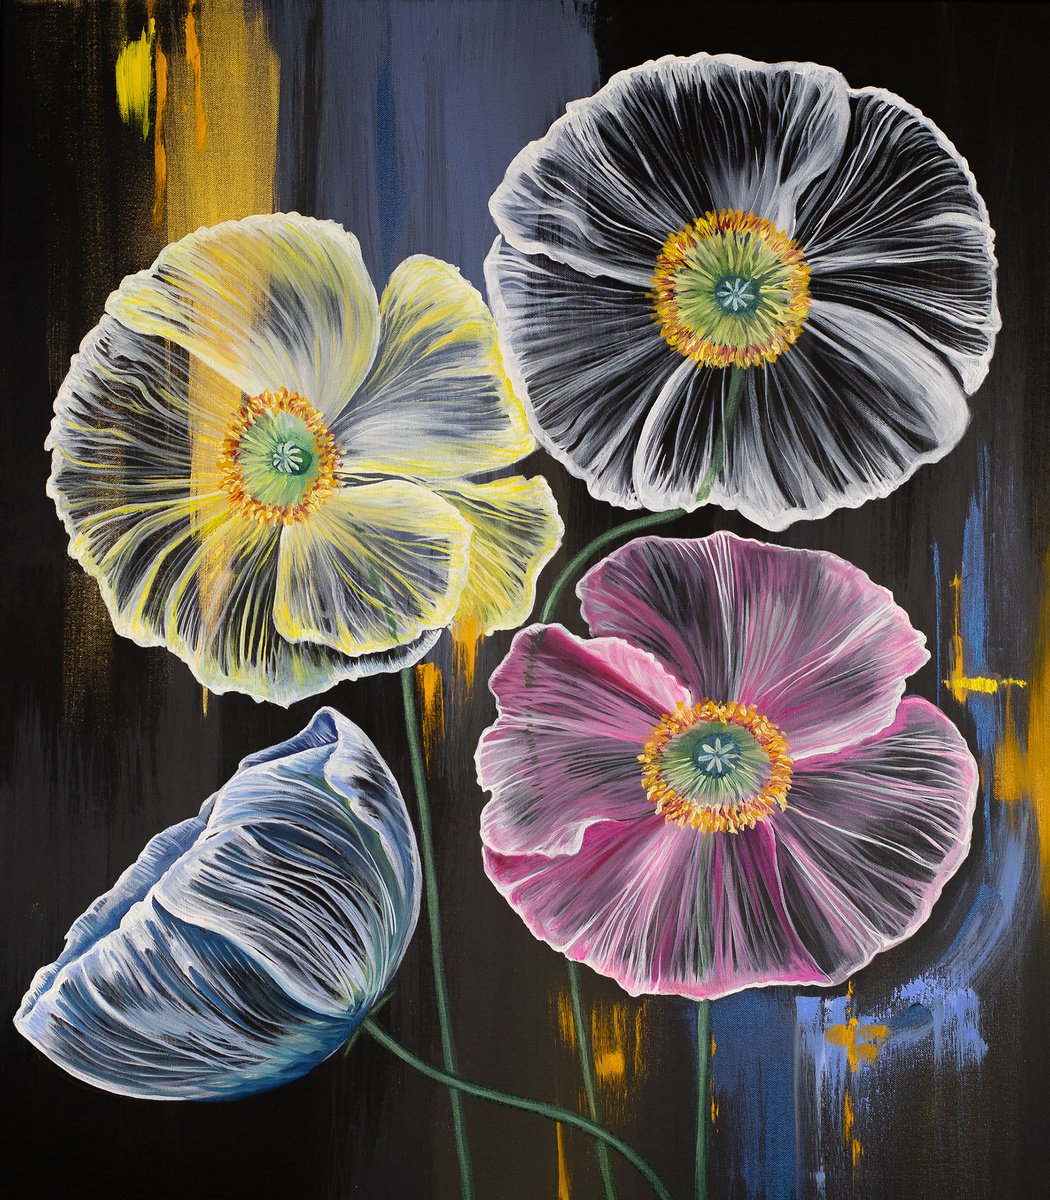 Jellyfish flowers by Daria Shalik